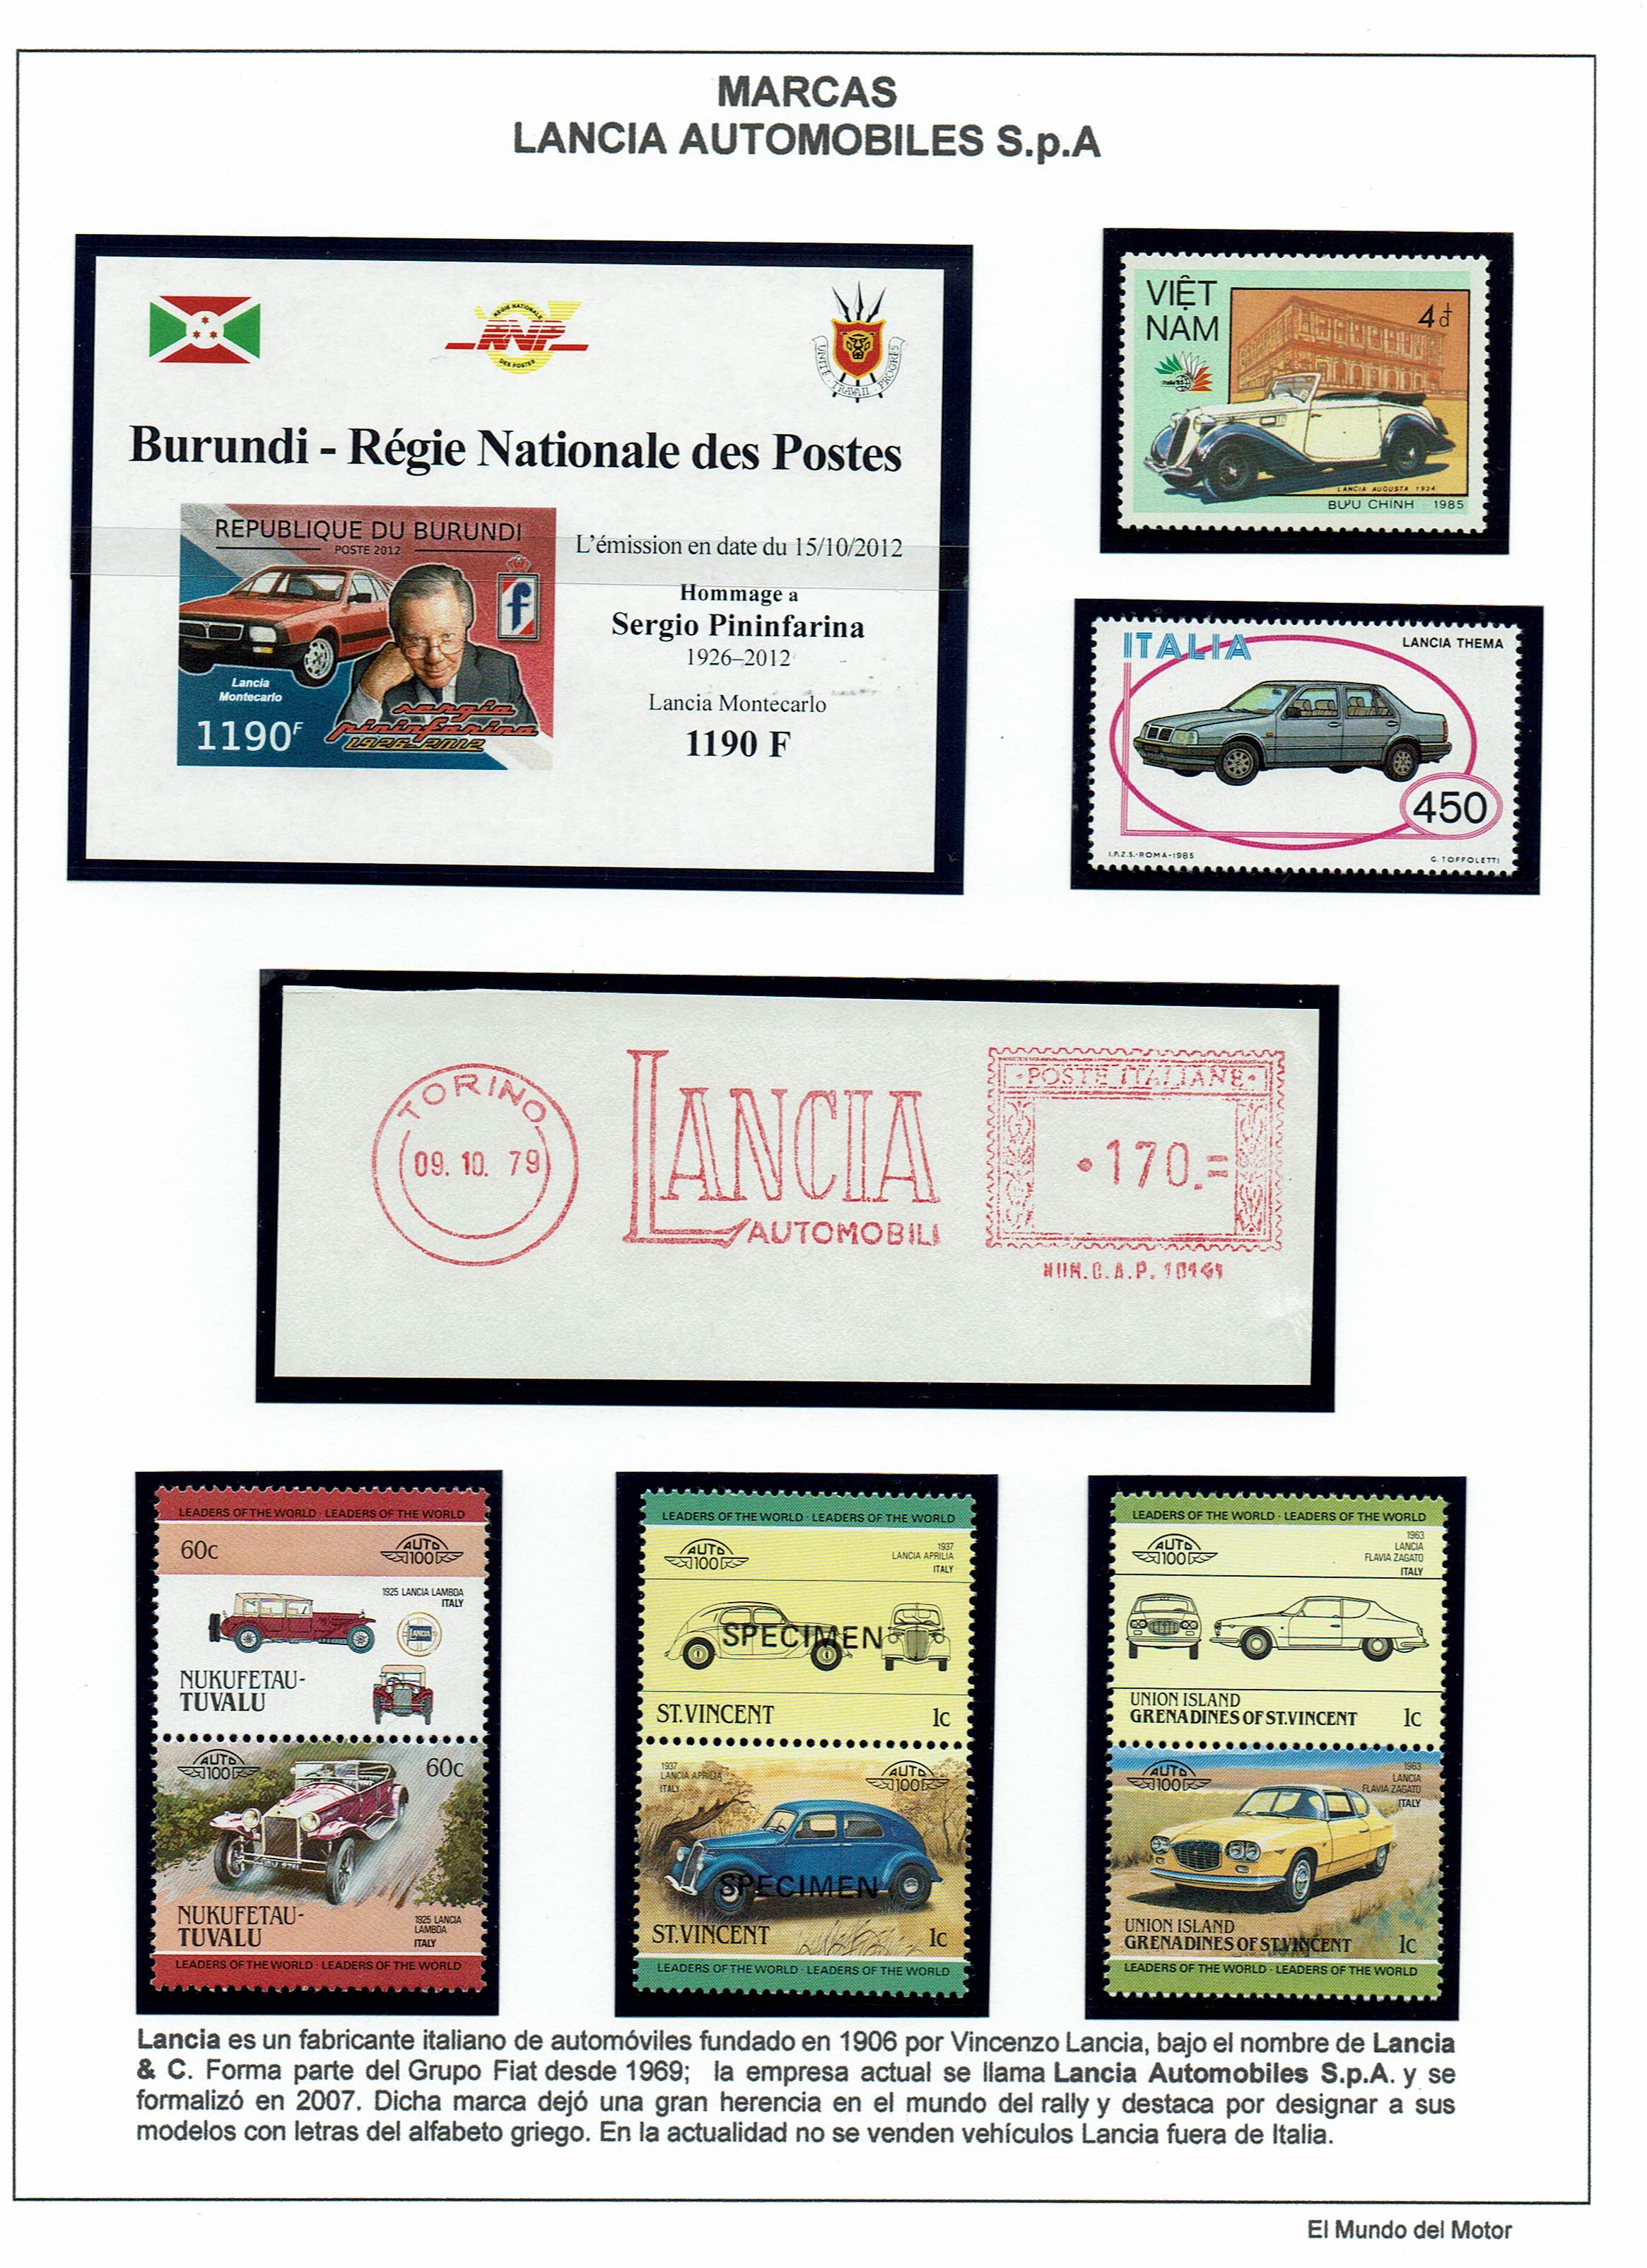 Lancia Automobiles S.p.A.